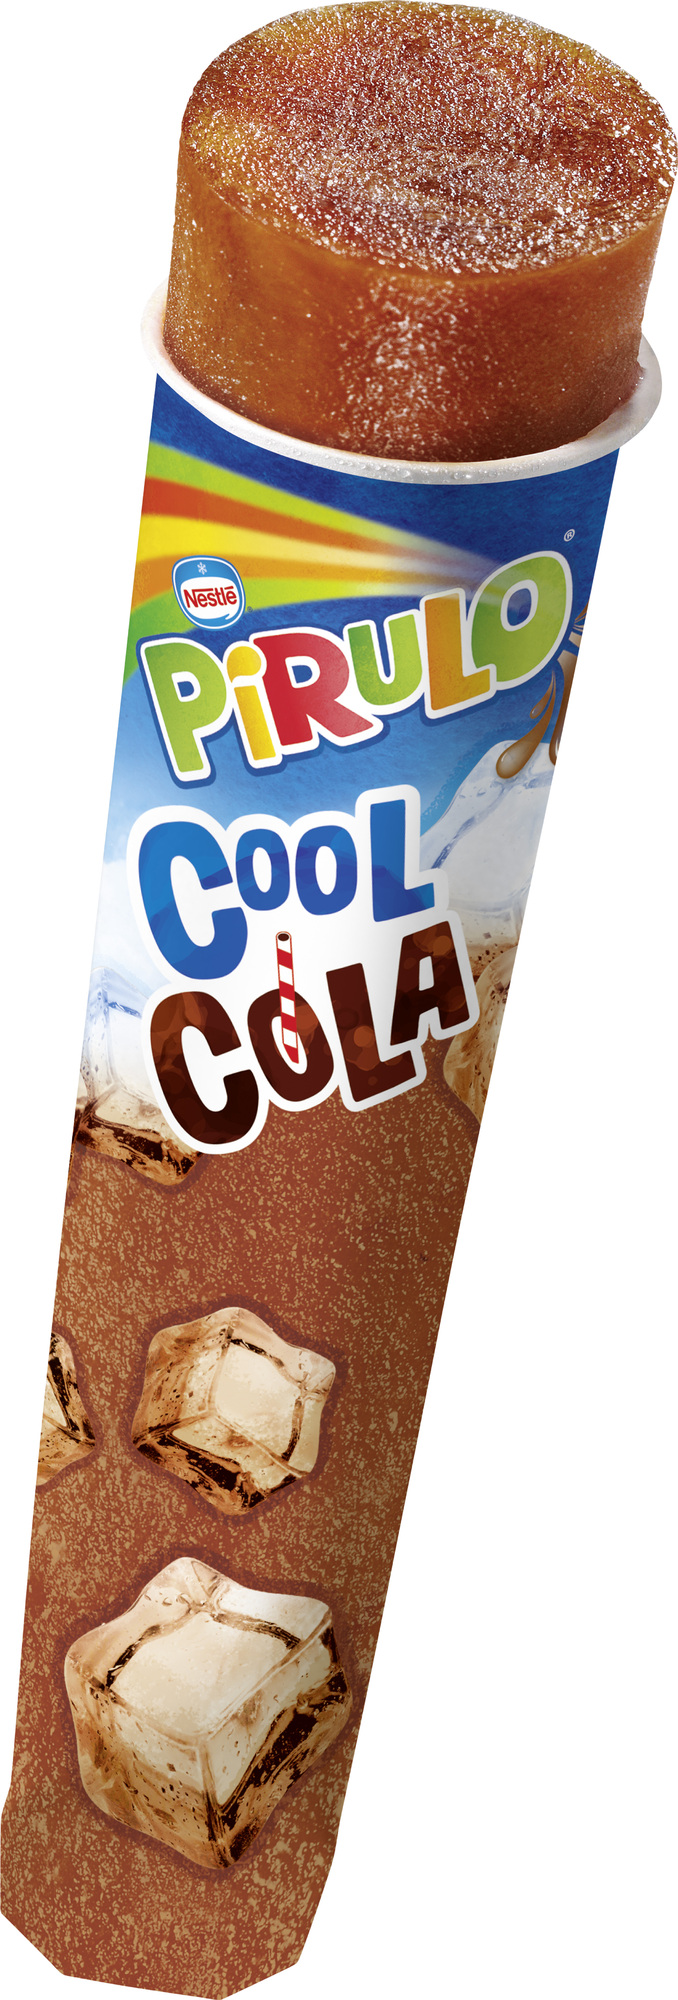 PIRULO Cool Cola Eis 99ml